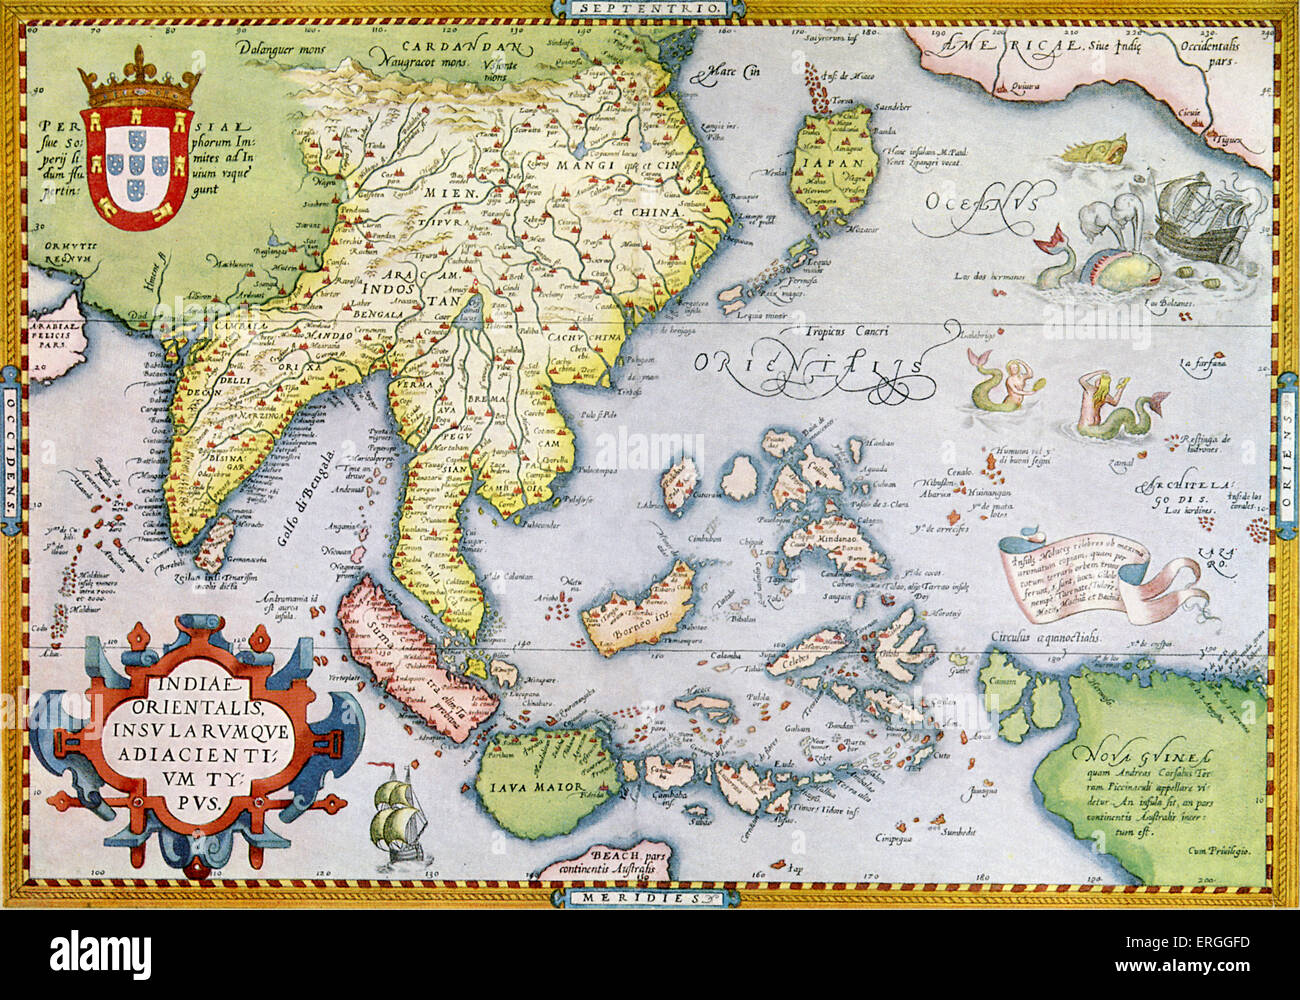 Mappa di East India e isole adiacenti in "Theatrum Orbis Tearrarum' da Abraham Ortelius, 1570. Foto Stock